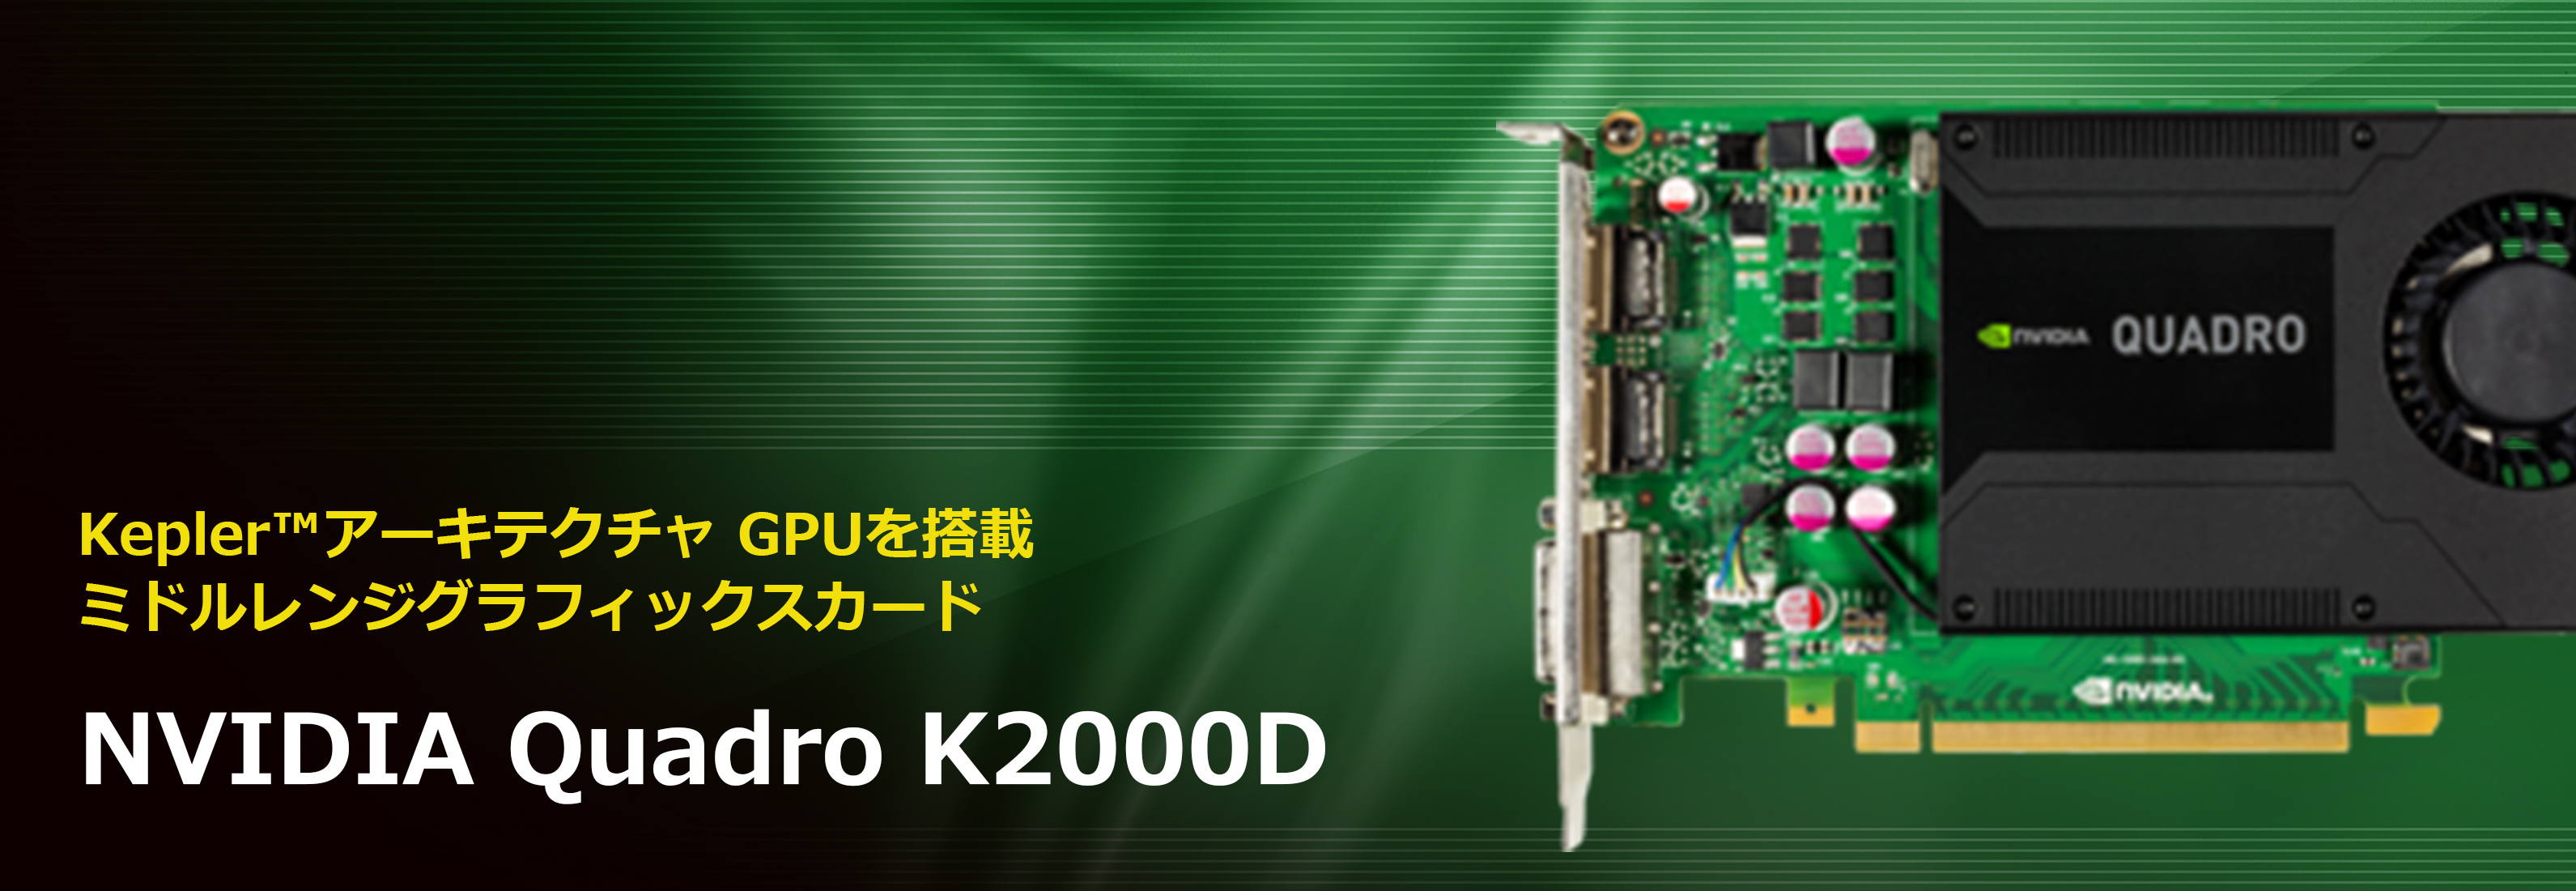 NVIDIA Quadro K2000D | 菱洋エレクトロ株式会社 - NVIDIA製品情報